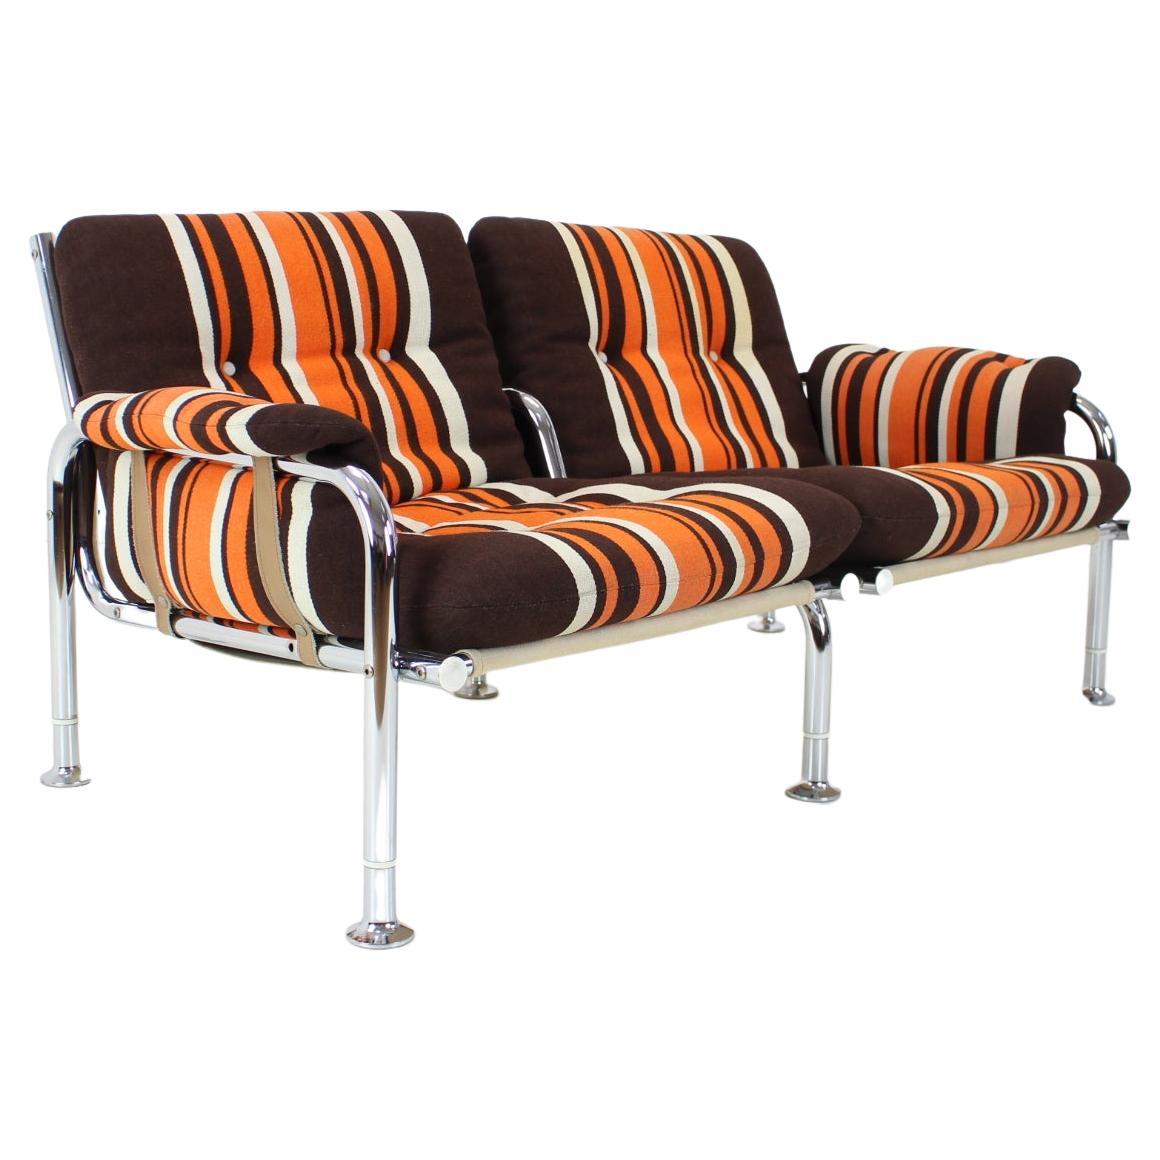 1960er Jahre Chrom 2-Sitzer Sofa, Dänemark